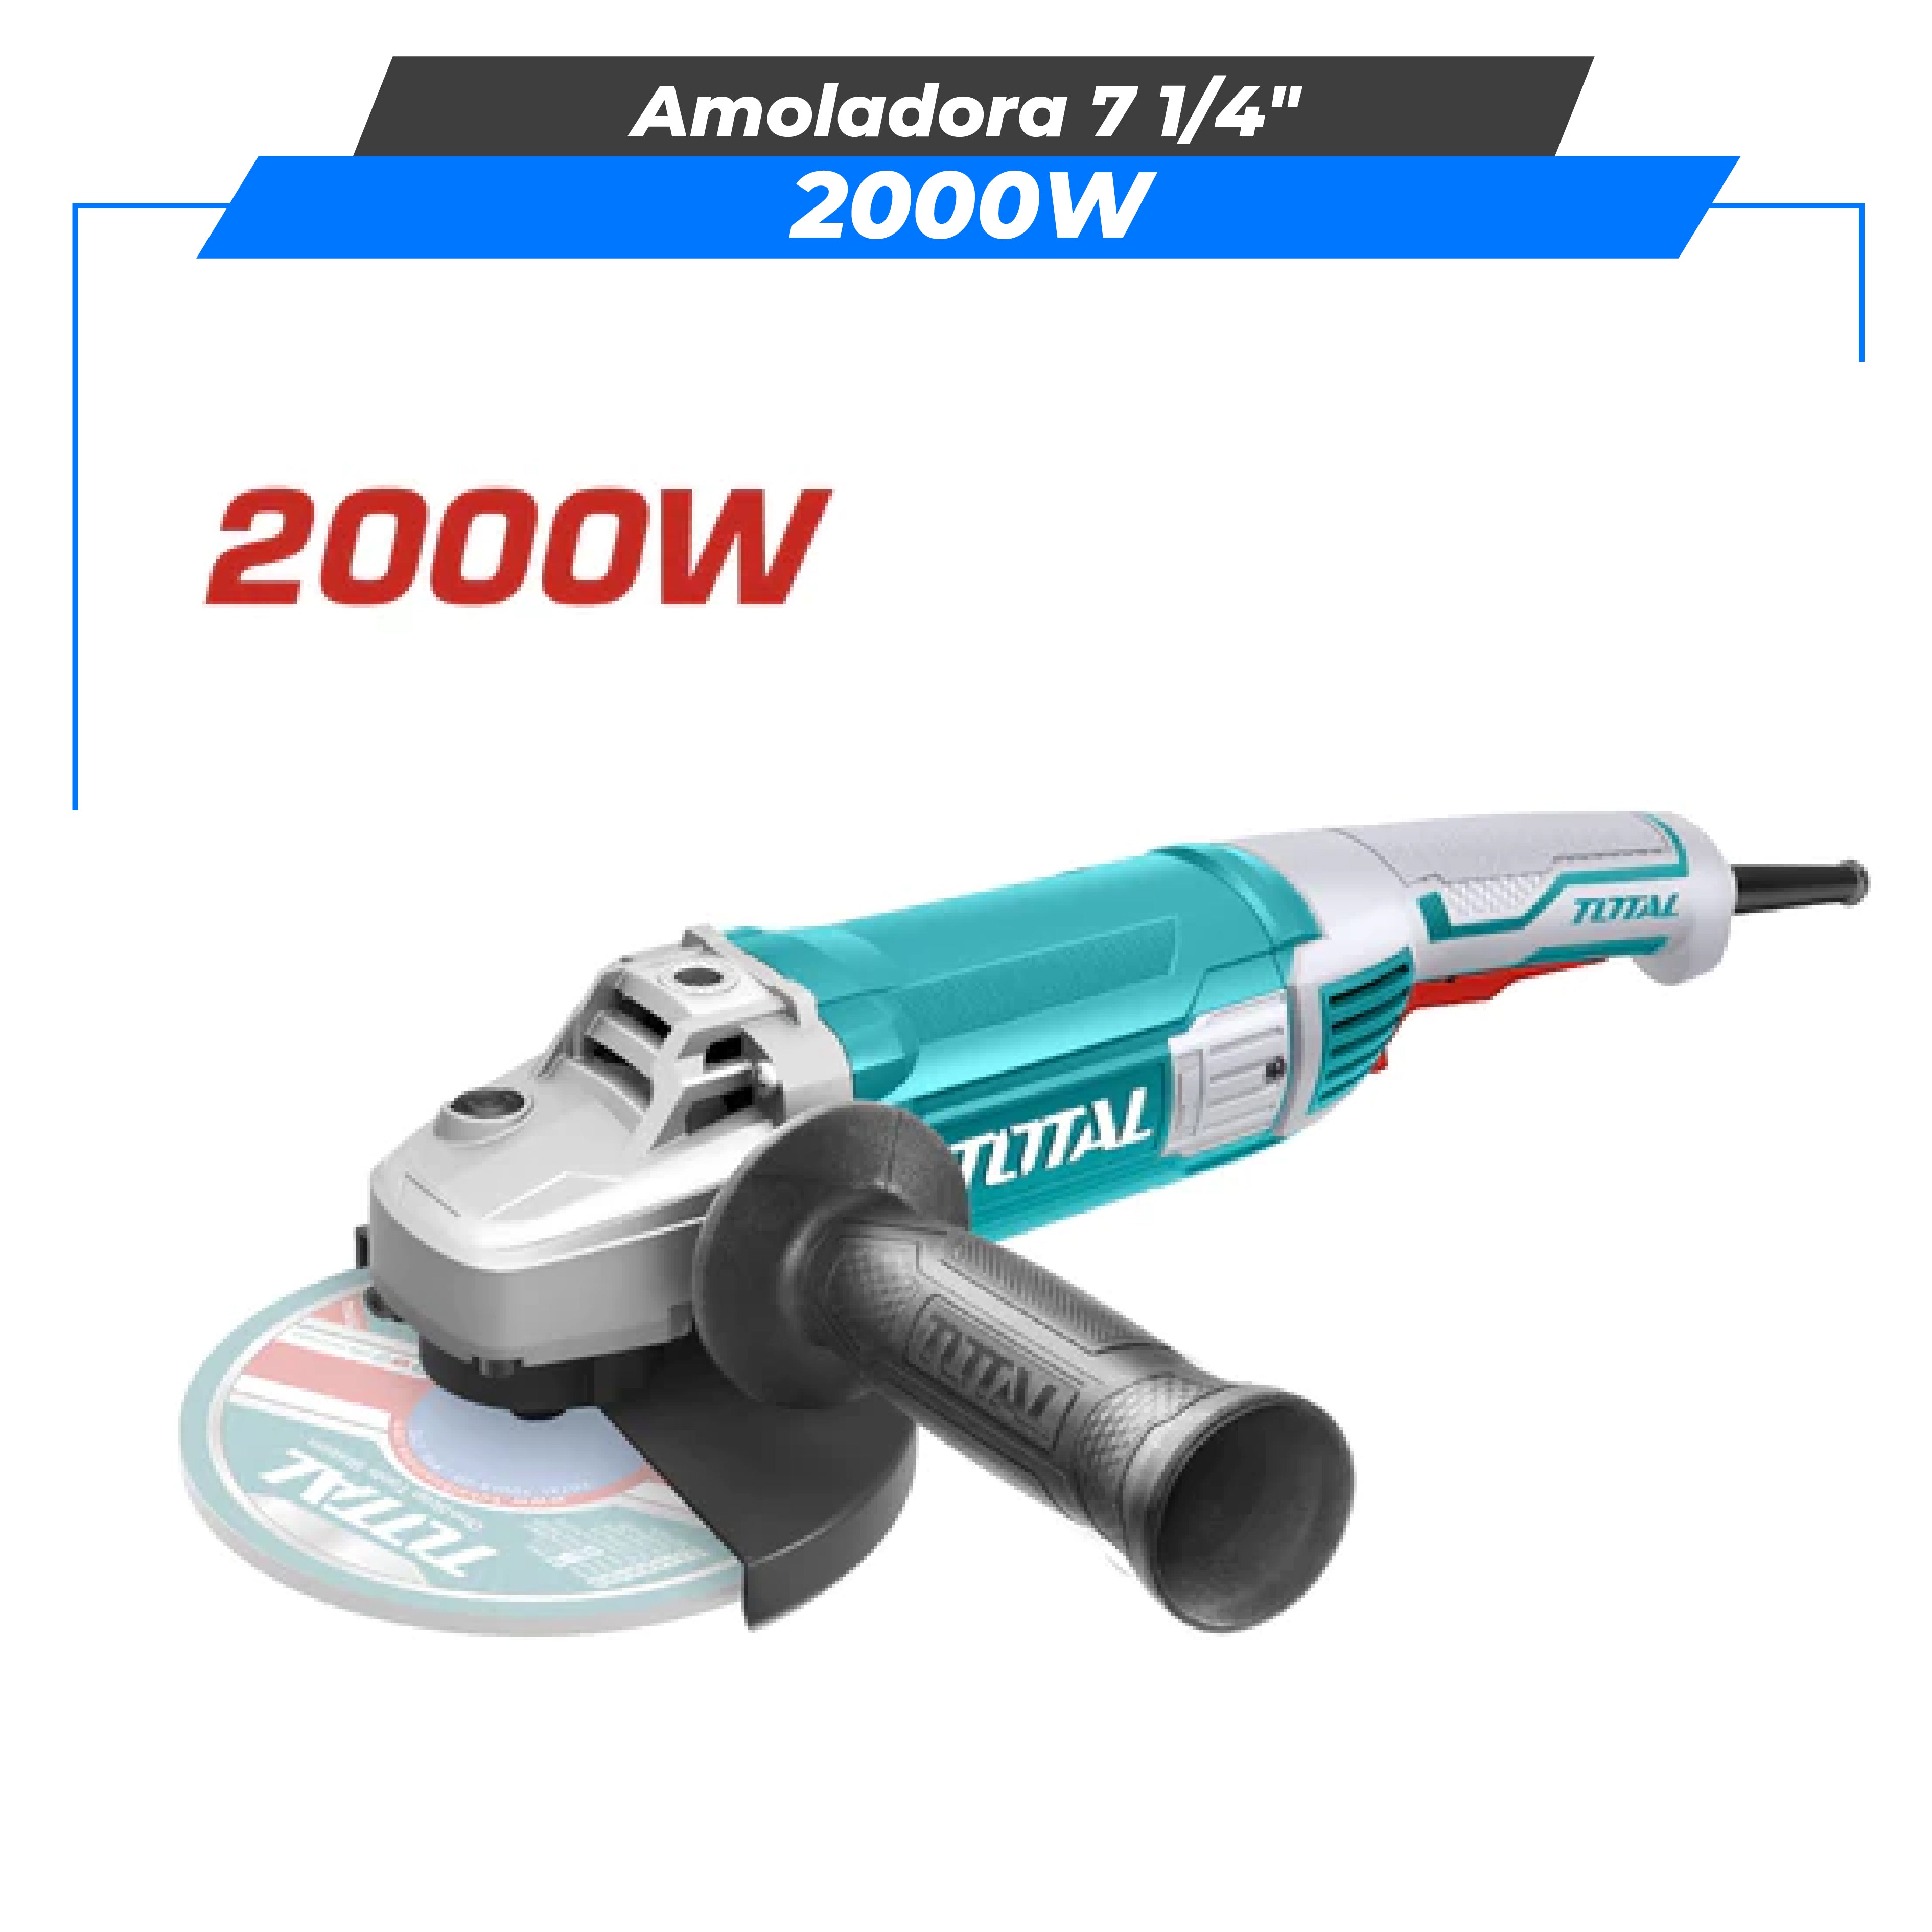 Amoladora 7 1/4" 2000W